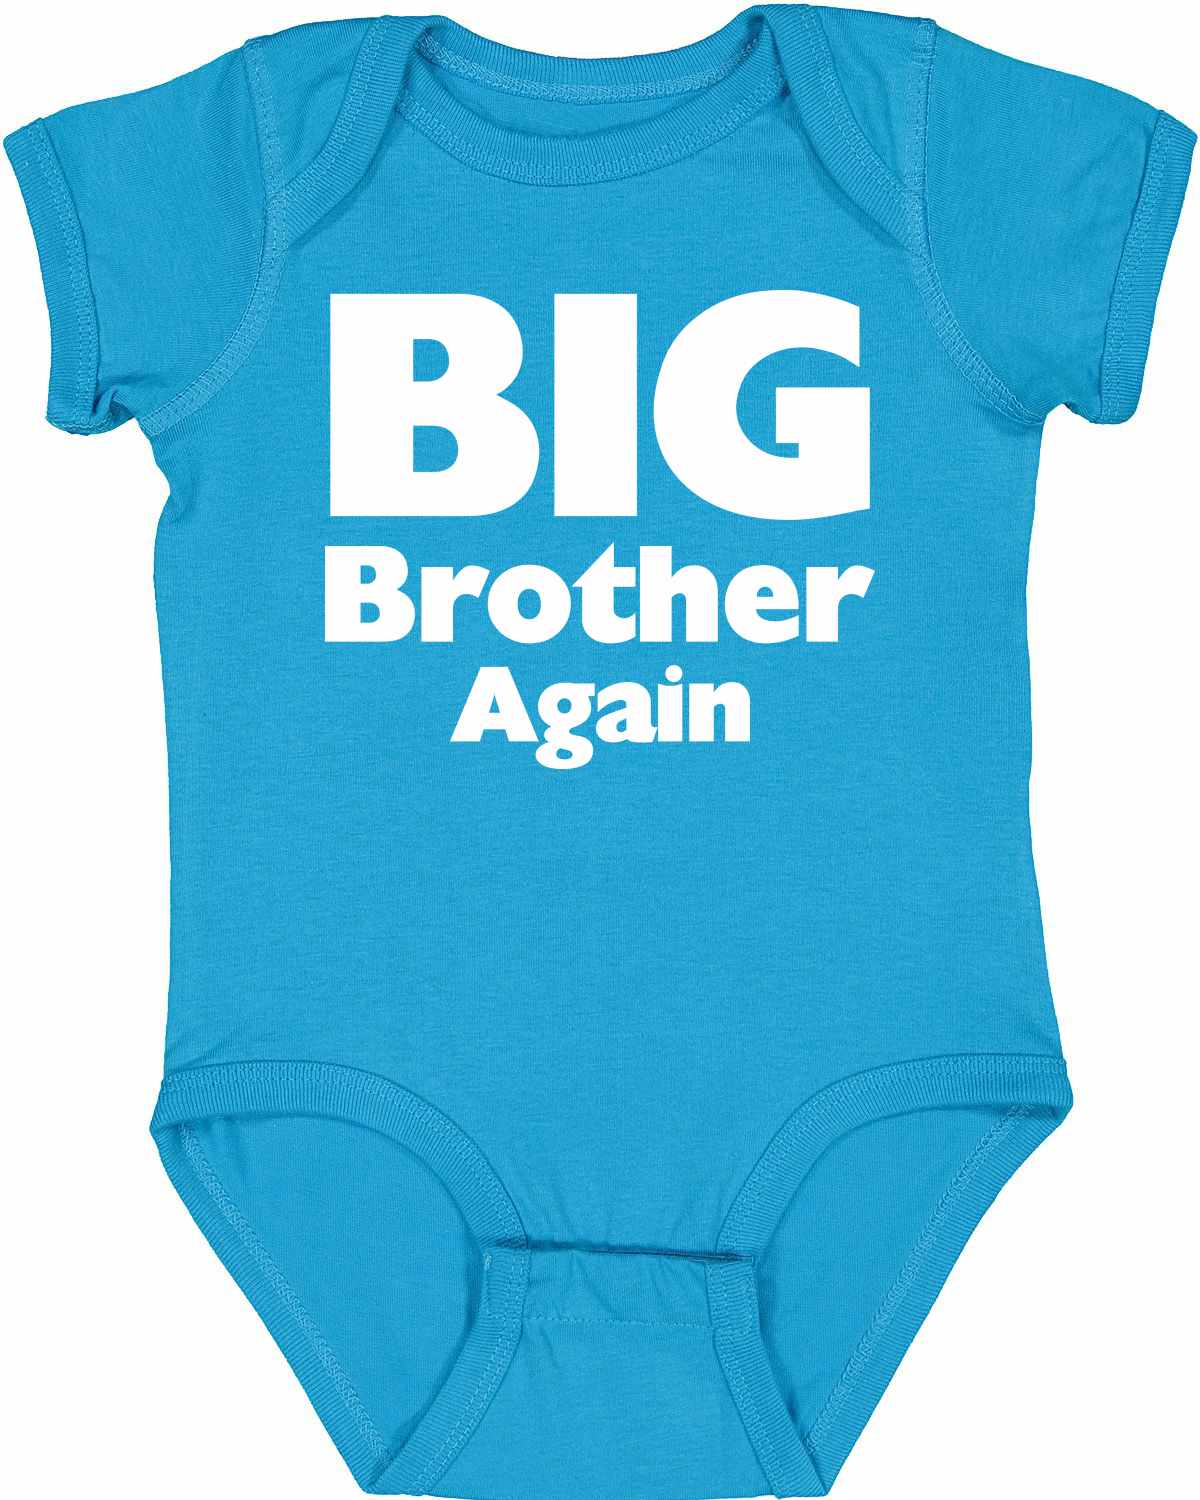 Big Brother Again on Infant BodySuit (#1333-10)